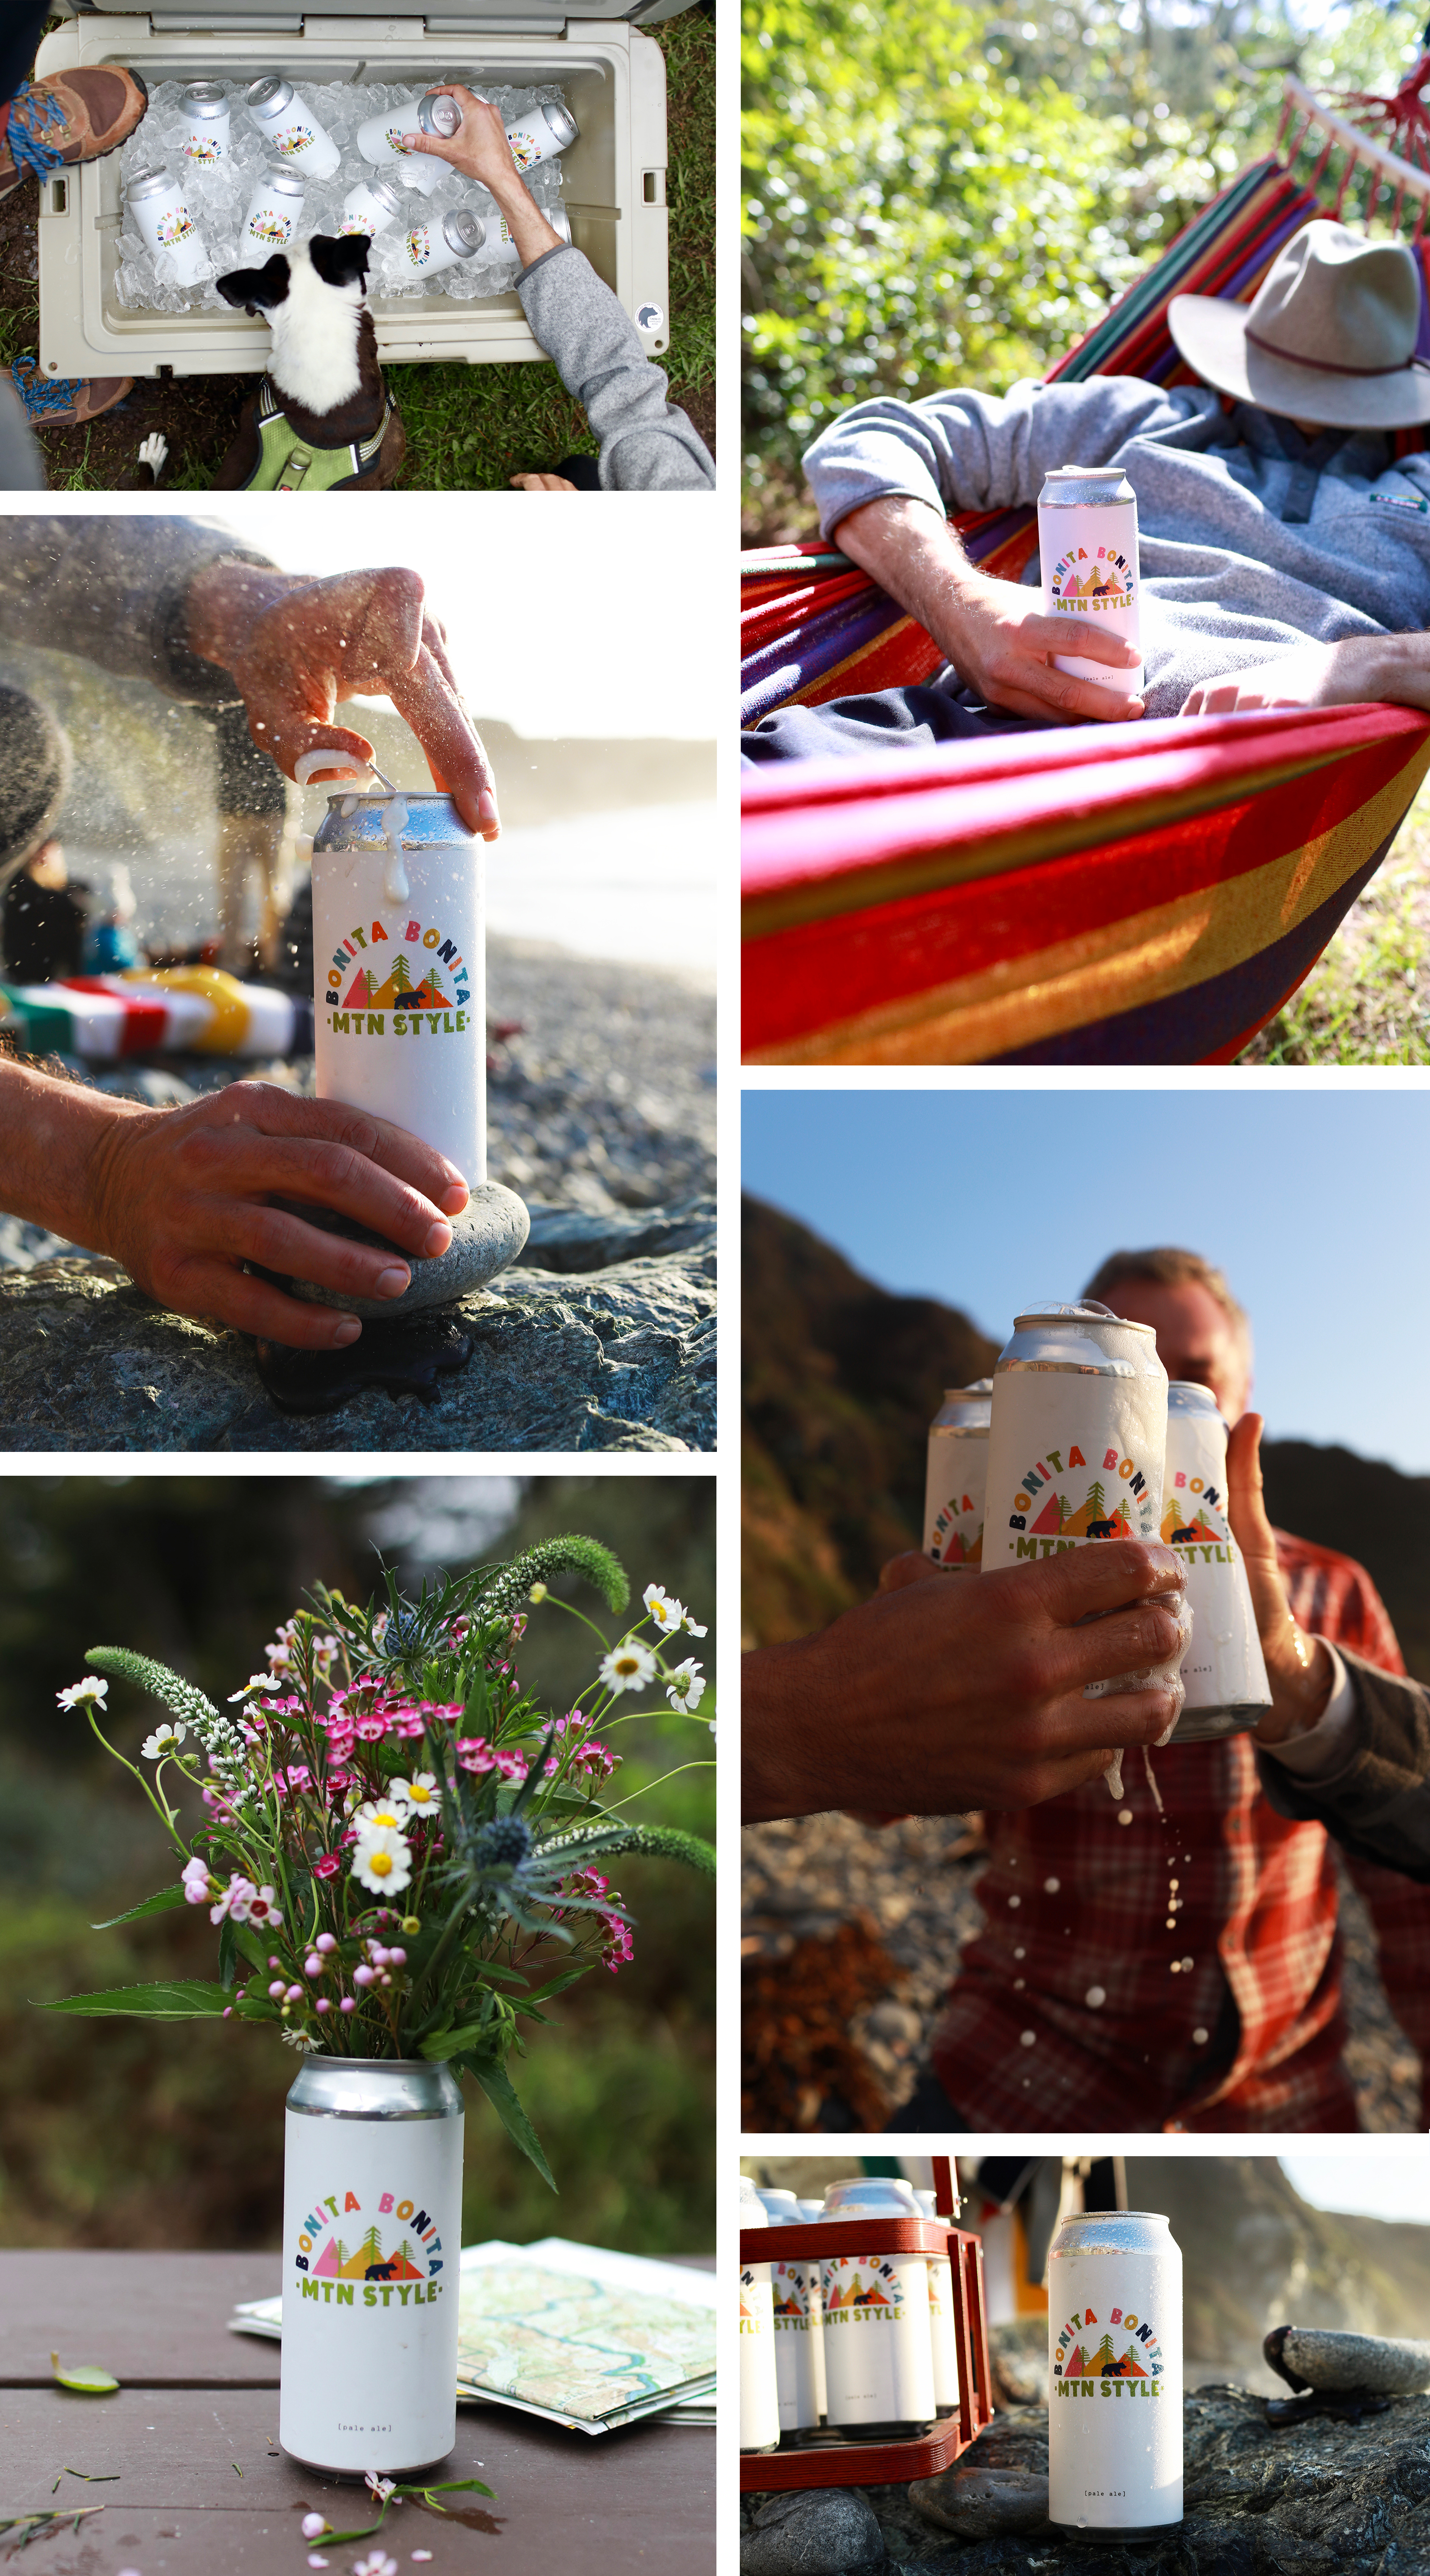 bonita bonita mountain-style pale ale - guy relaxing in a hamok - person opening a can